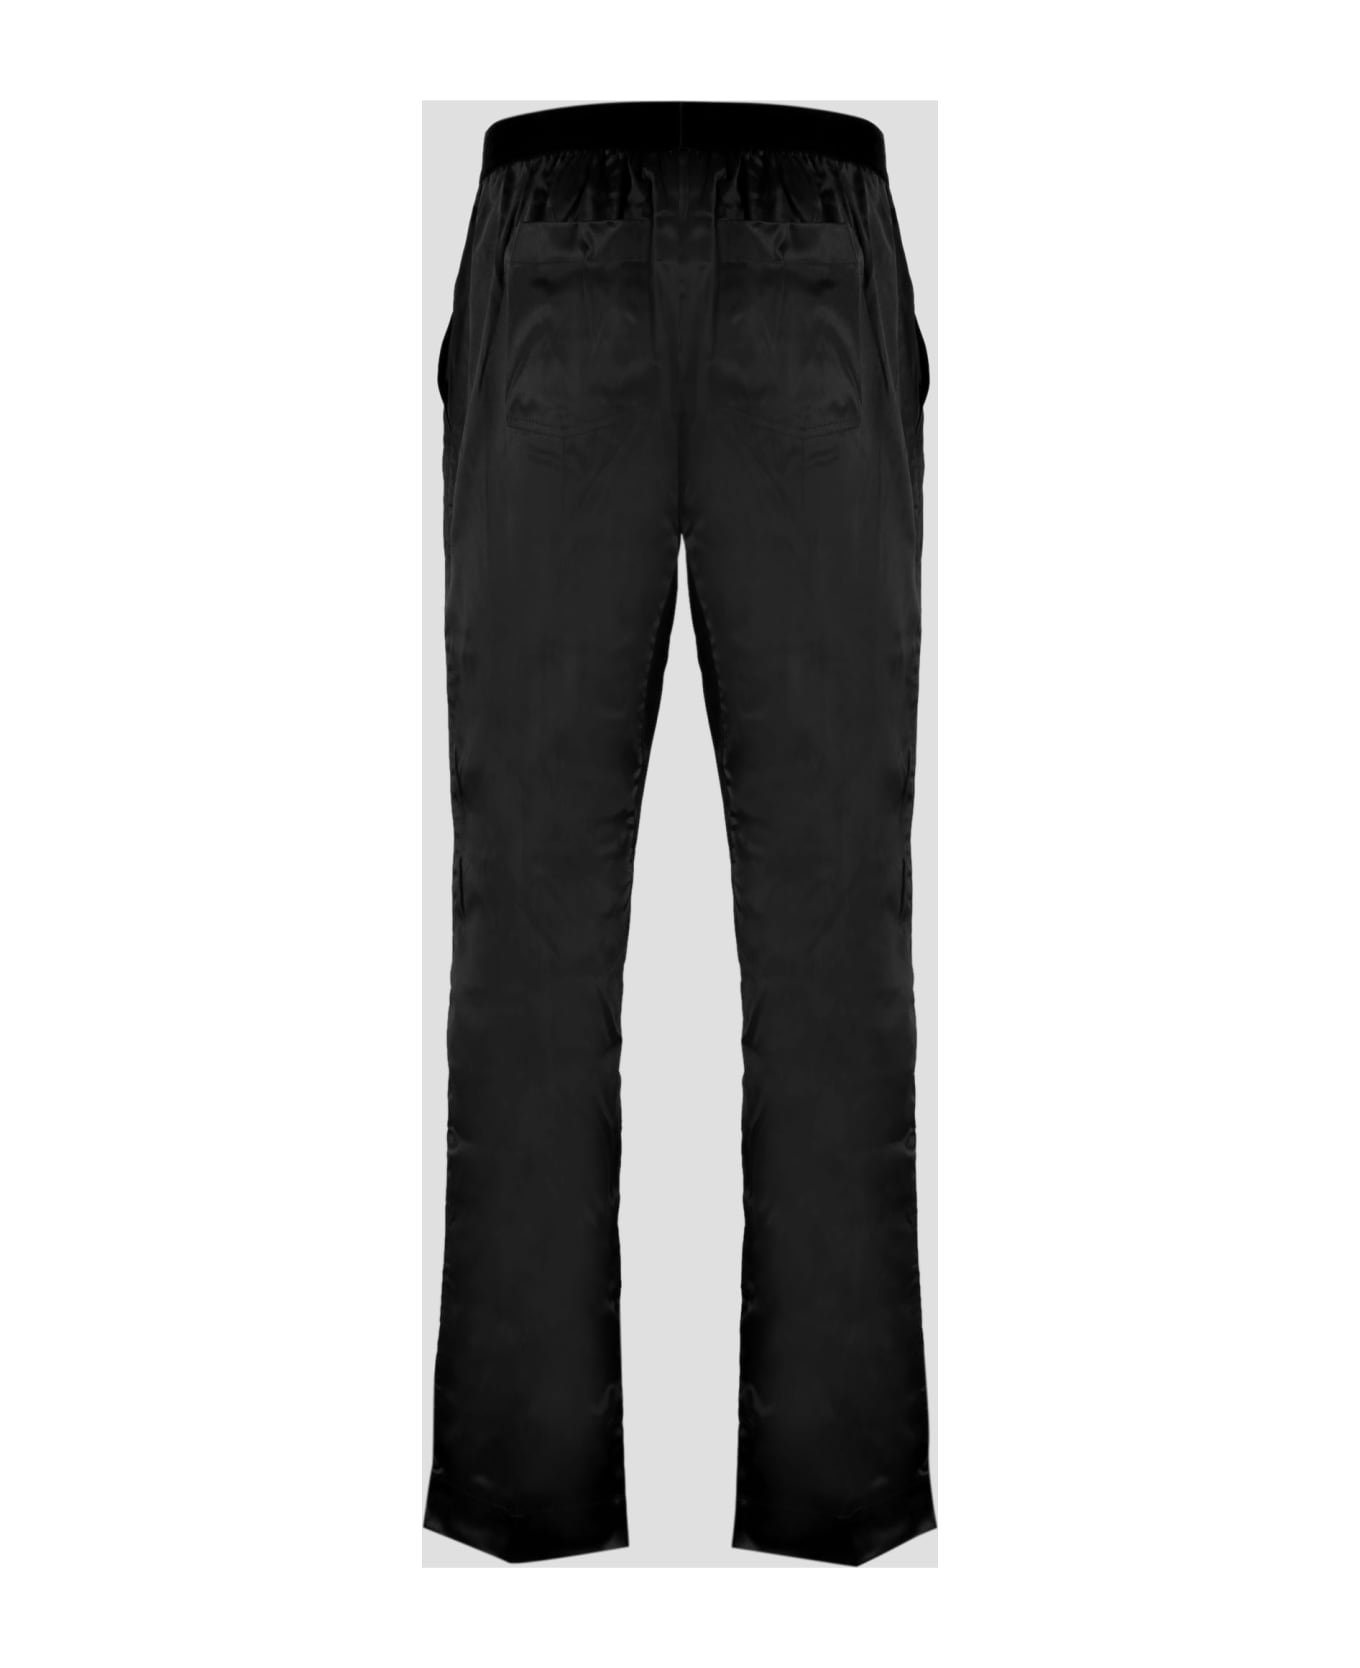 Tom Ford Silk Pajama Pants - Black